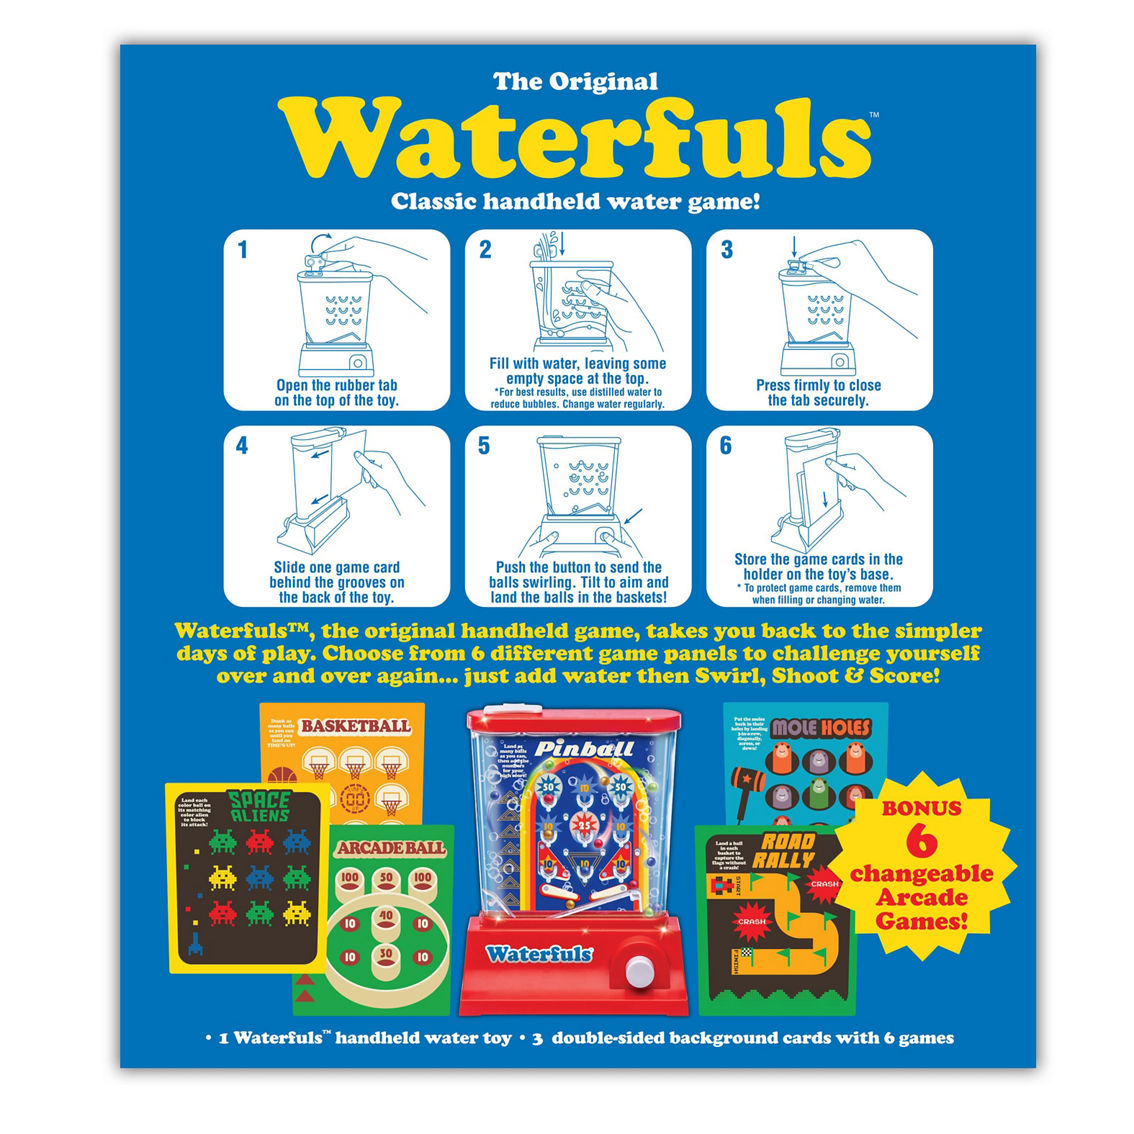 Waterfuls The Original Waterfuls - Classic Handheld Water Game - Image 4 of 5